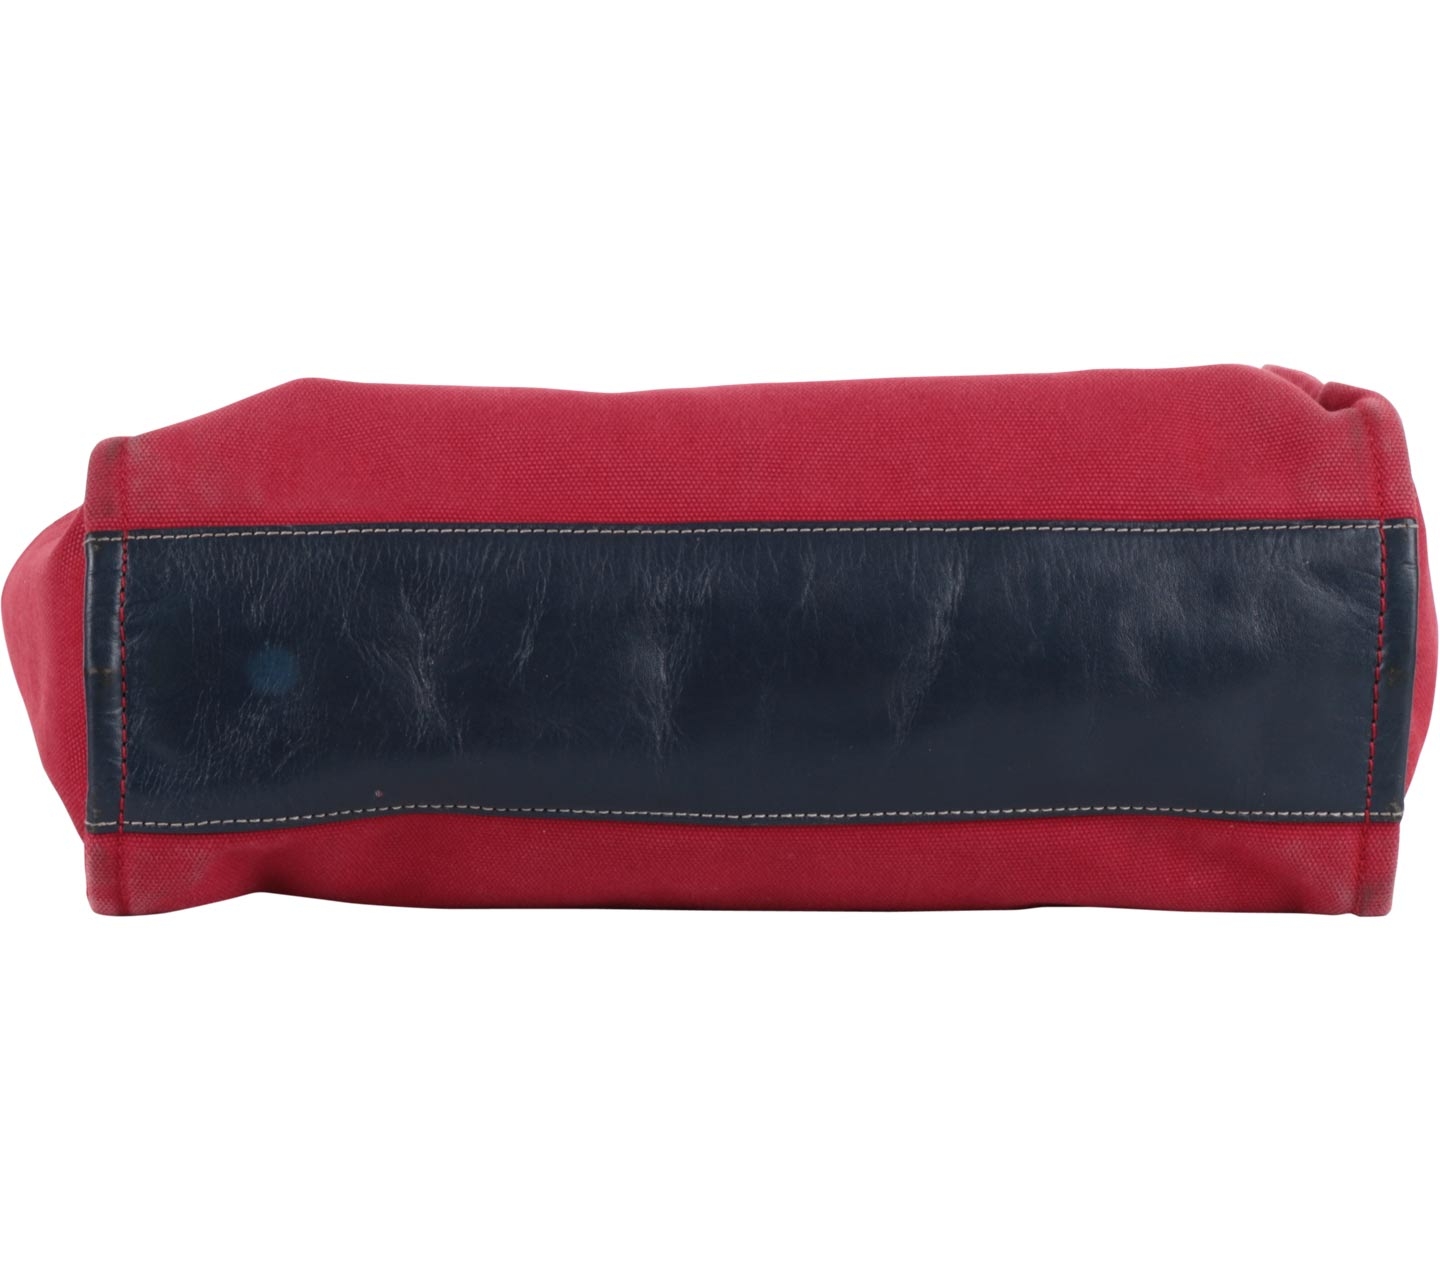 Kate Spade Red Black Trim Canvas Handbag